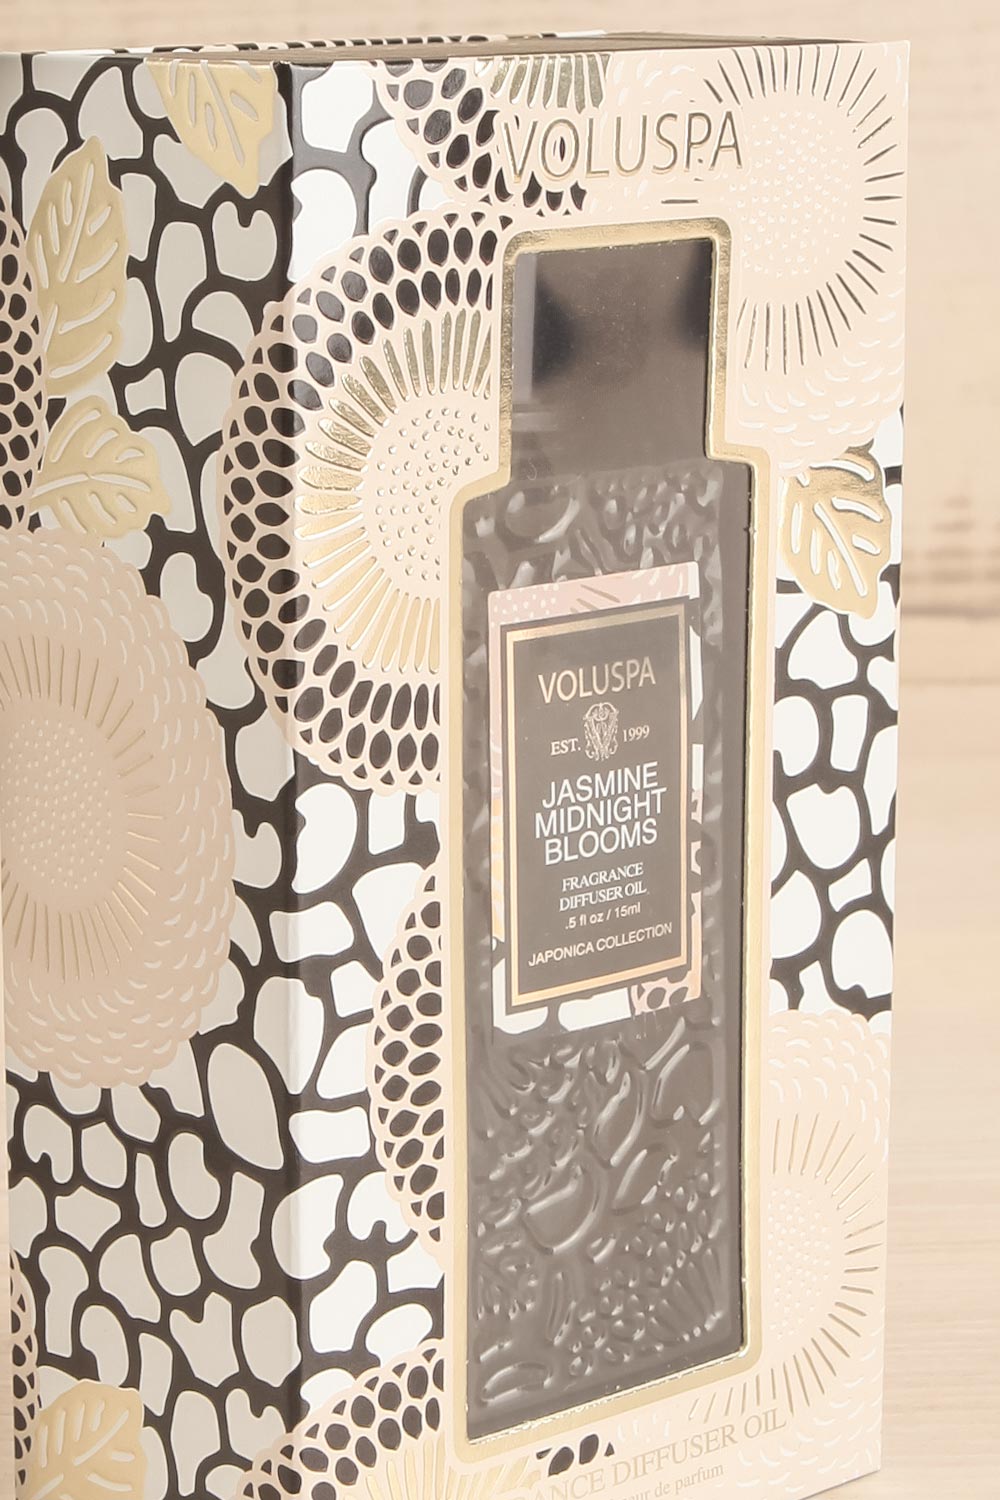 Jasmine Midnight Blooms Fragrance Diffuser Oil | Maison garçonne box close-up